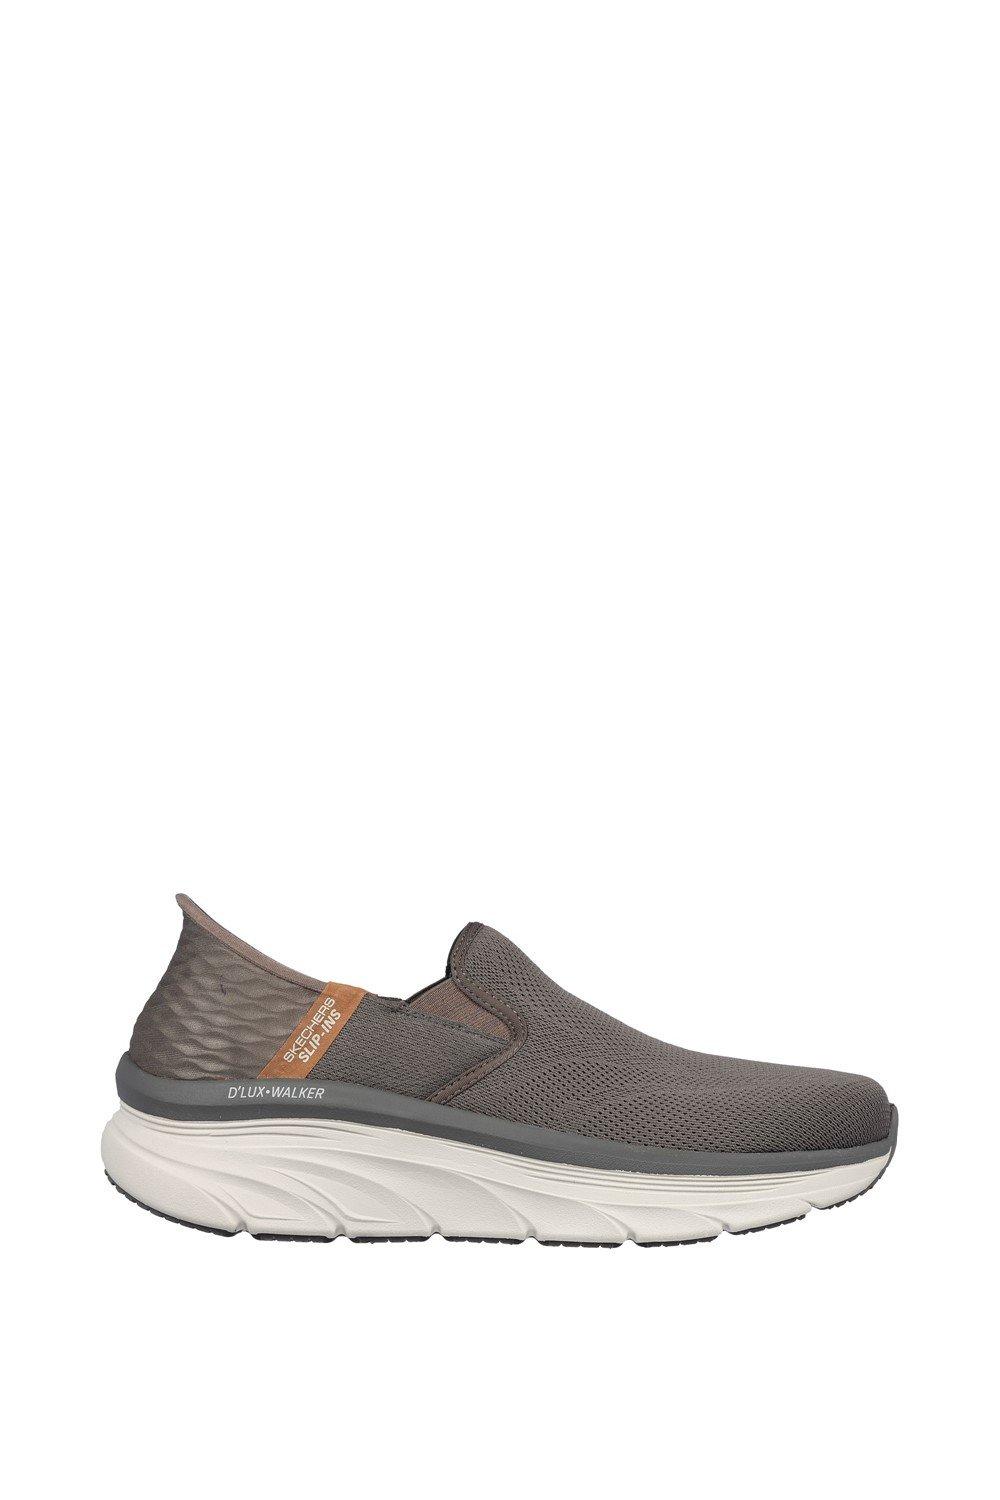 Обувь D'Lux Walker Orford Skechers, коричневый